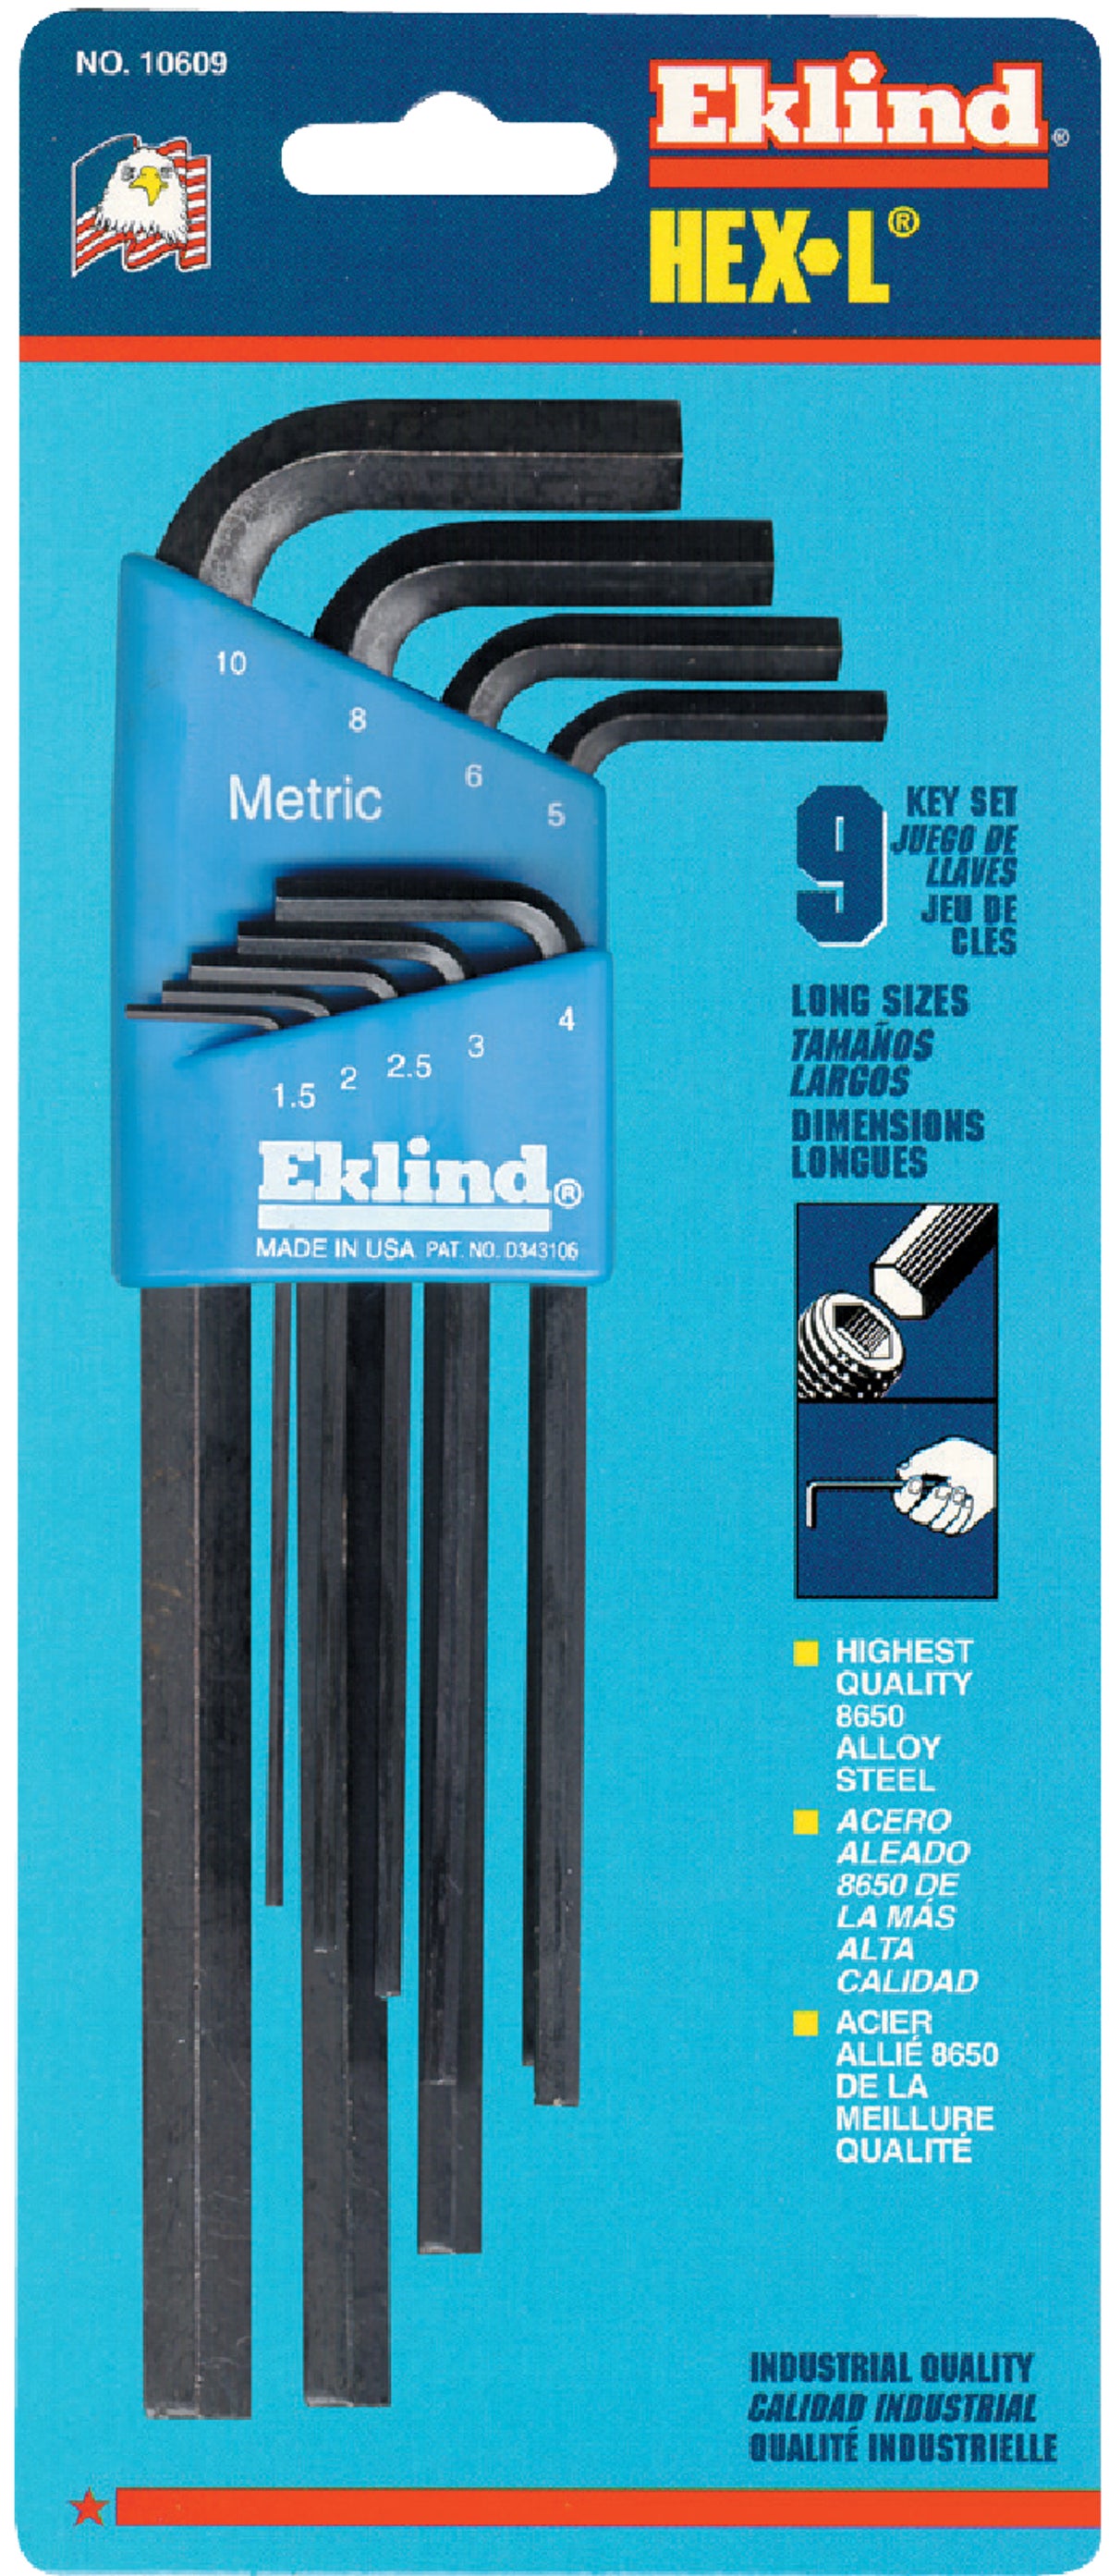 Eklind EKL10509 Hexagon Key Short Arm Set of 9 Metric 1.5-10mm